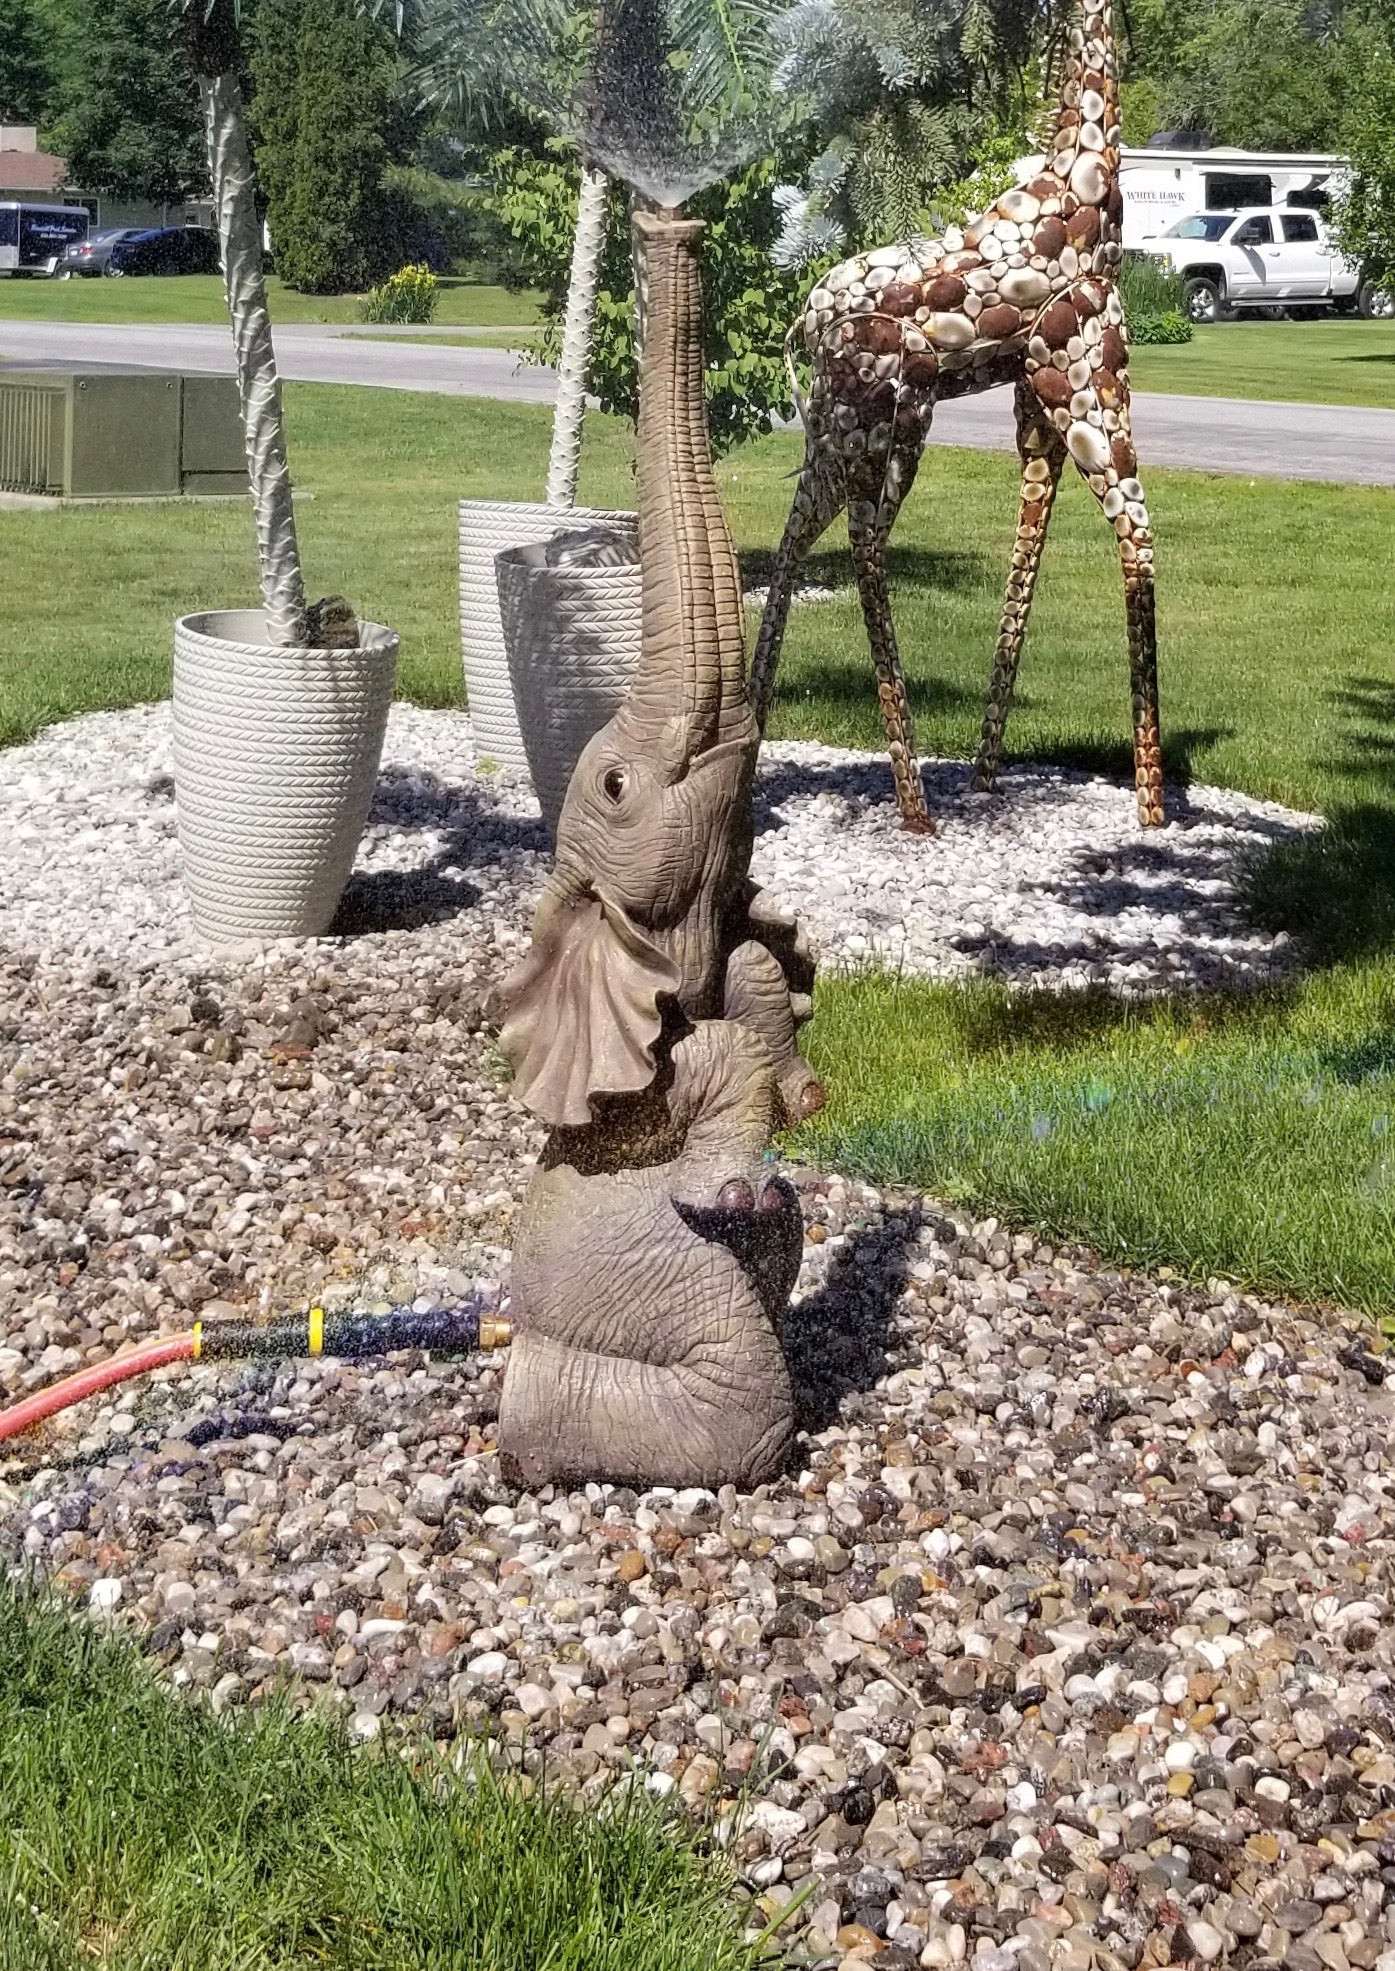 Elephant sprinkler on garden hose